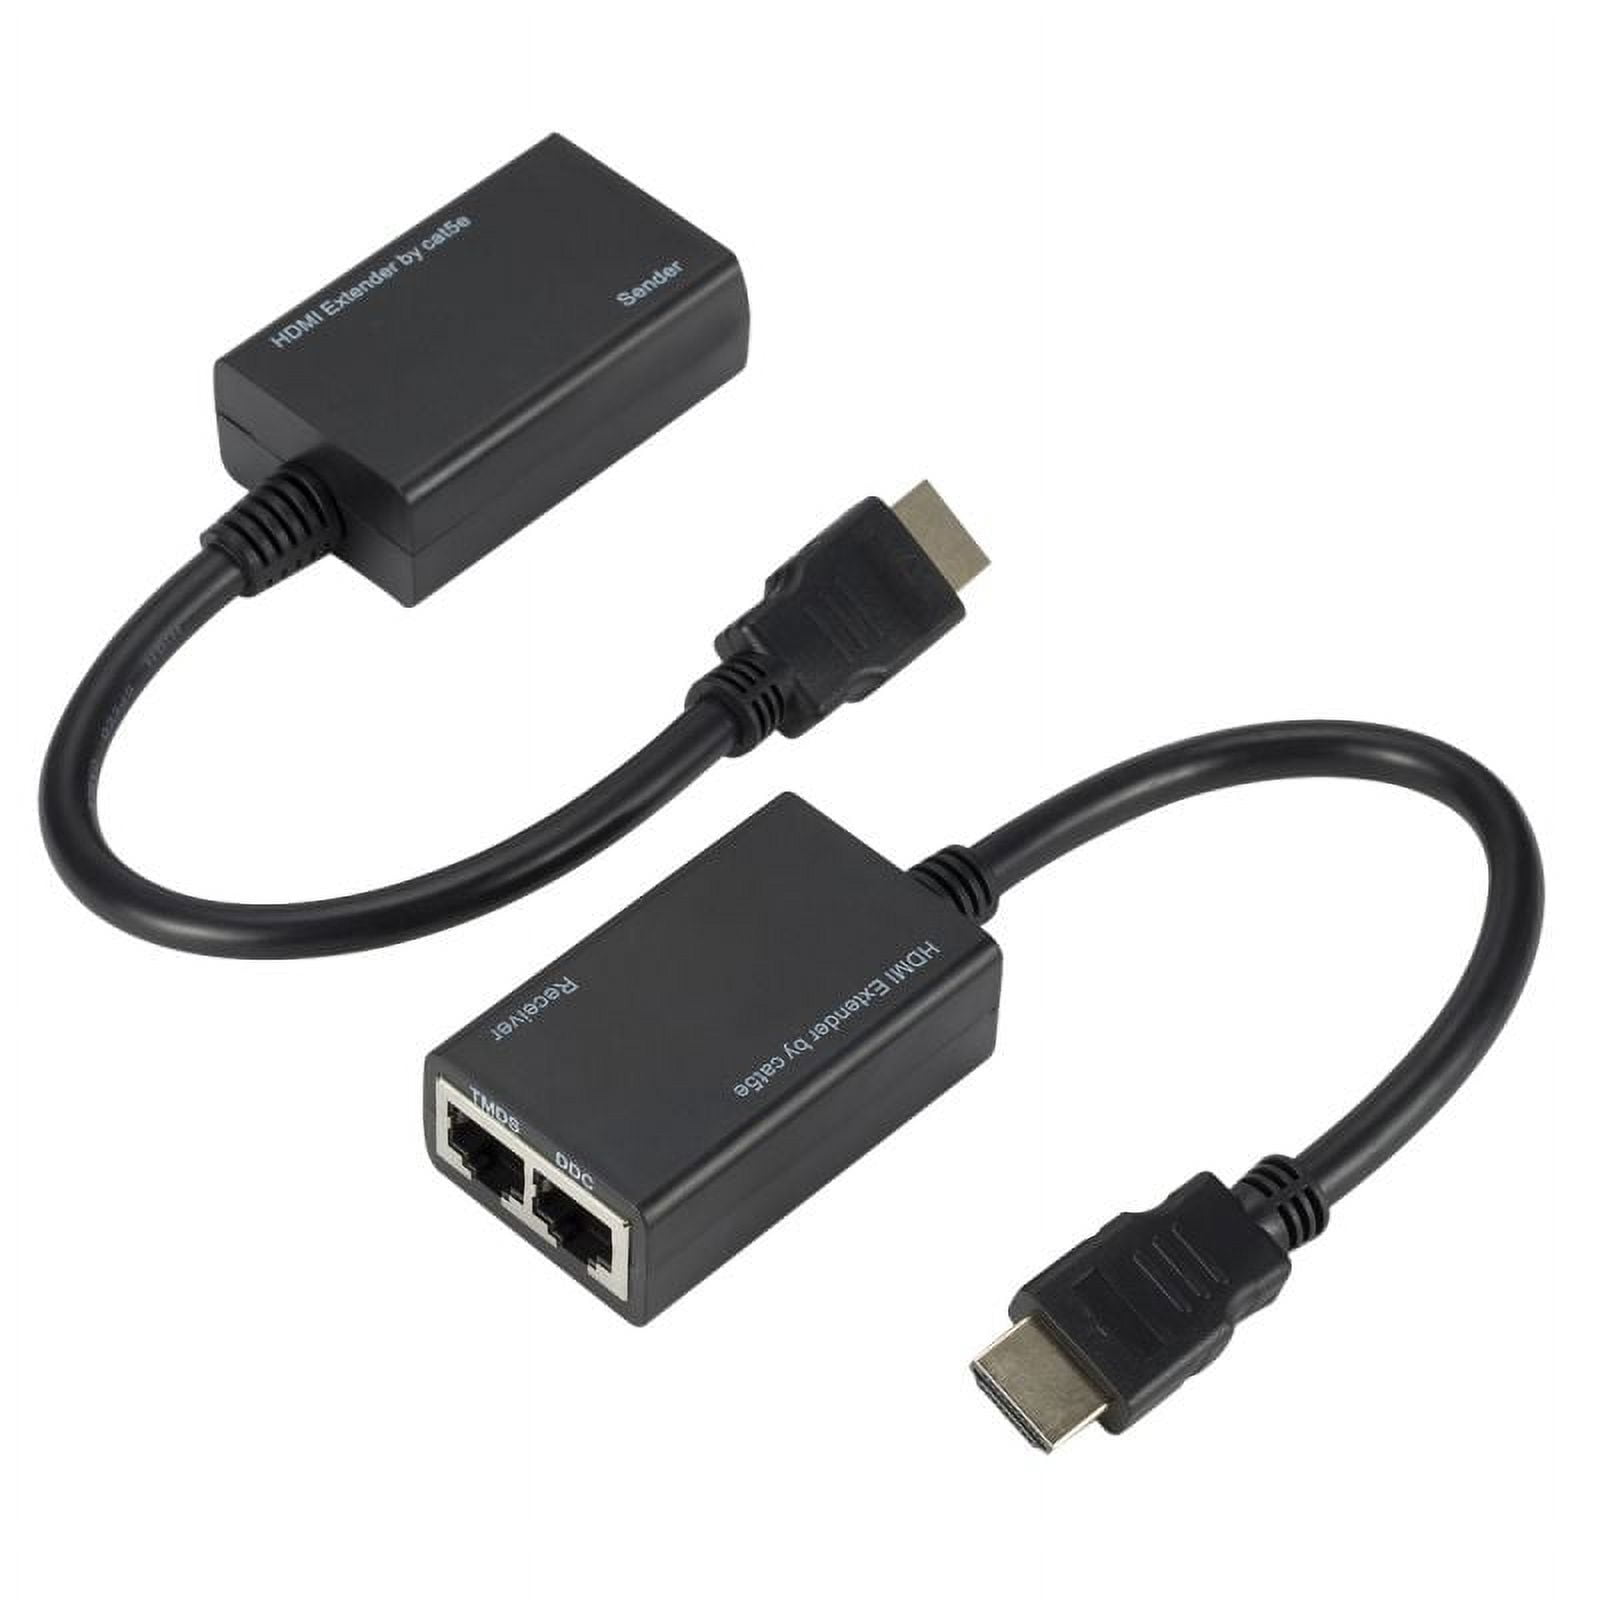 Adaptador Para Extender El Cable HDMI – Do it Center